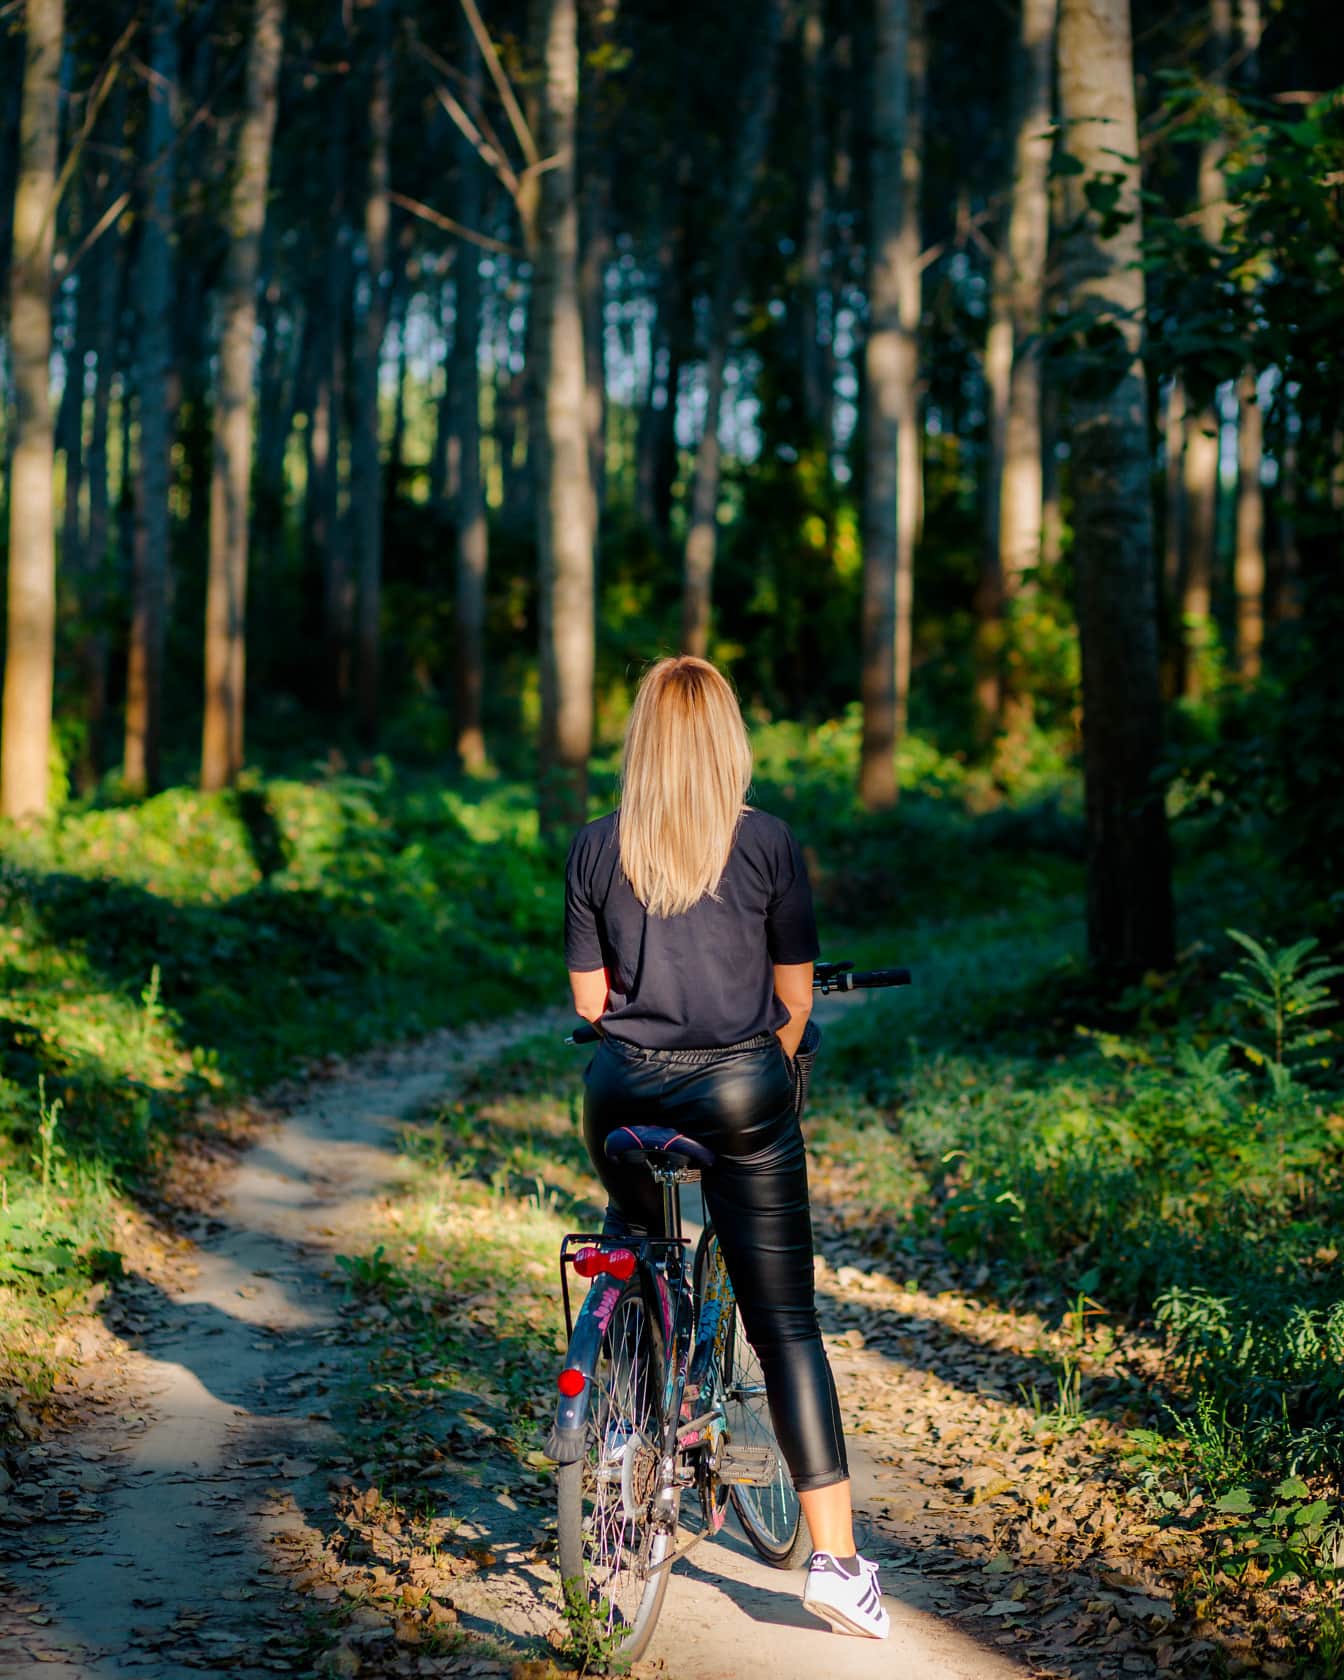 Adolescente de pelo rubio en bicicleta en camino forestal